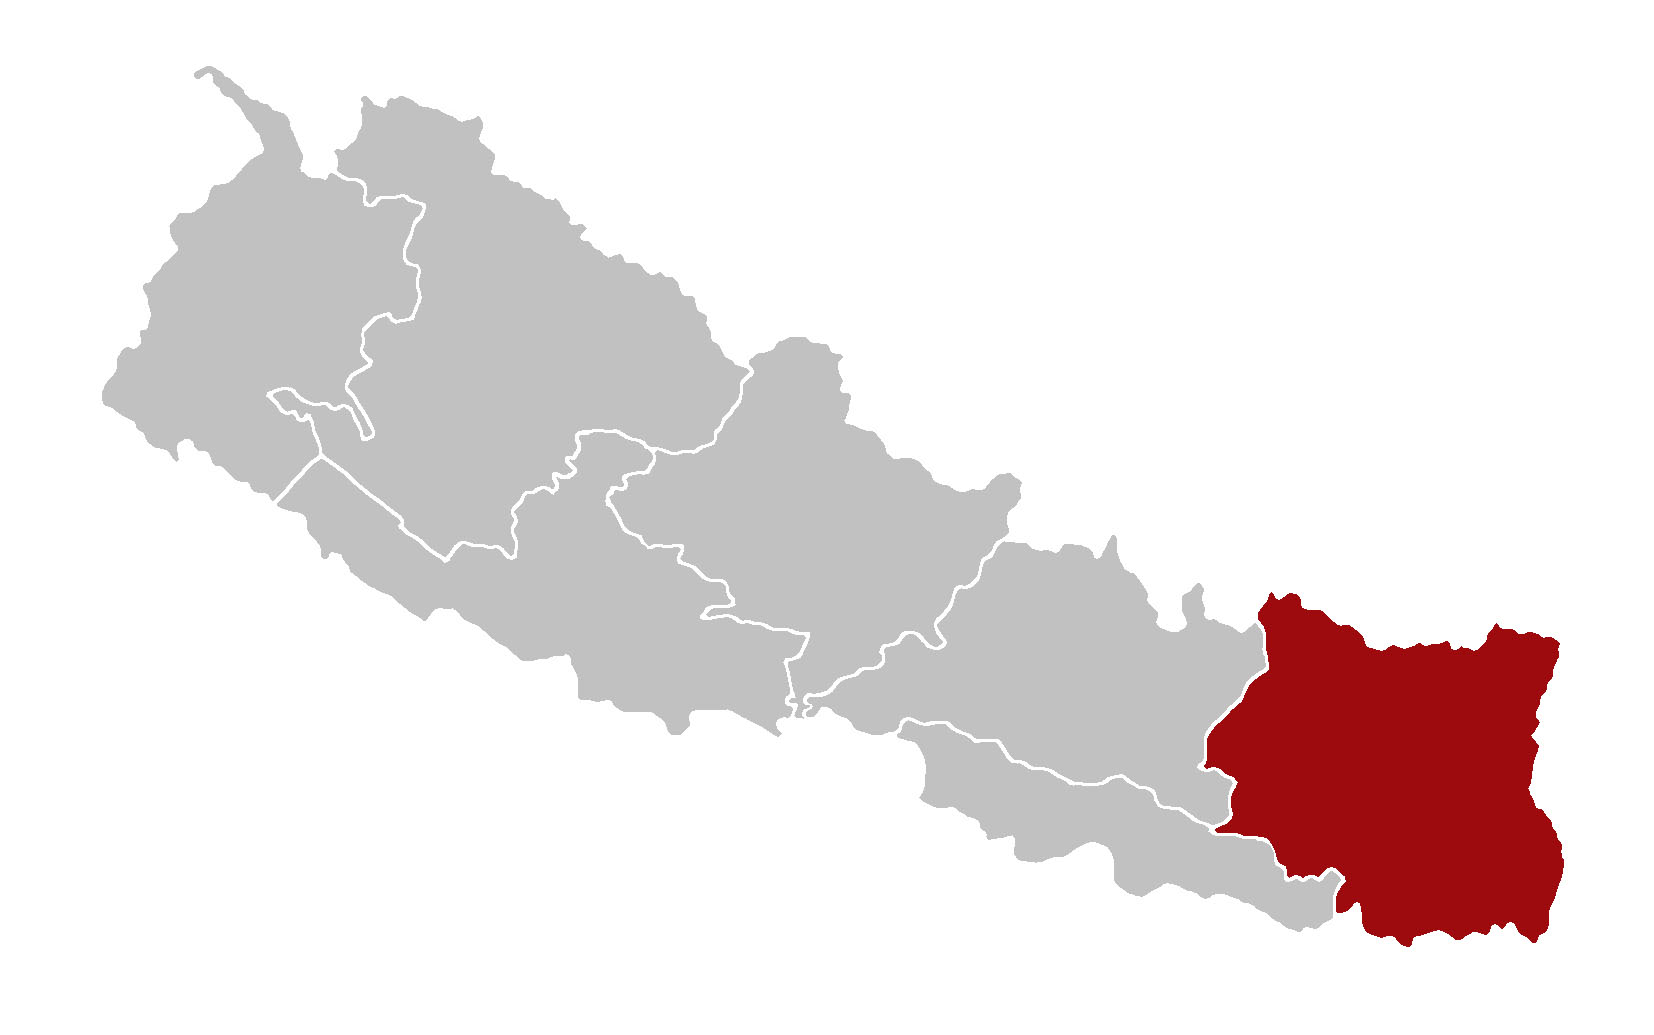 Koshi Pradesh Map of Nepal